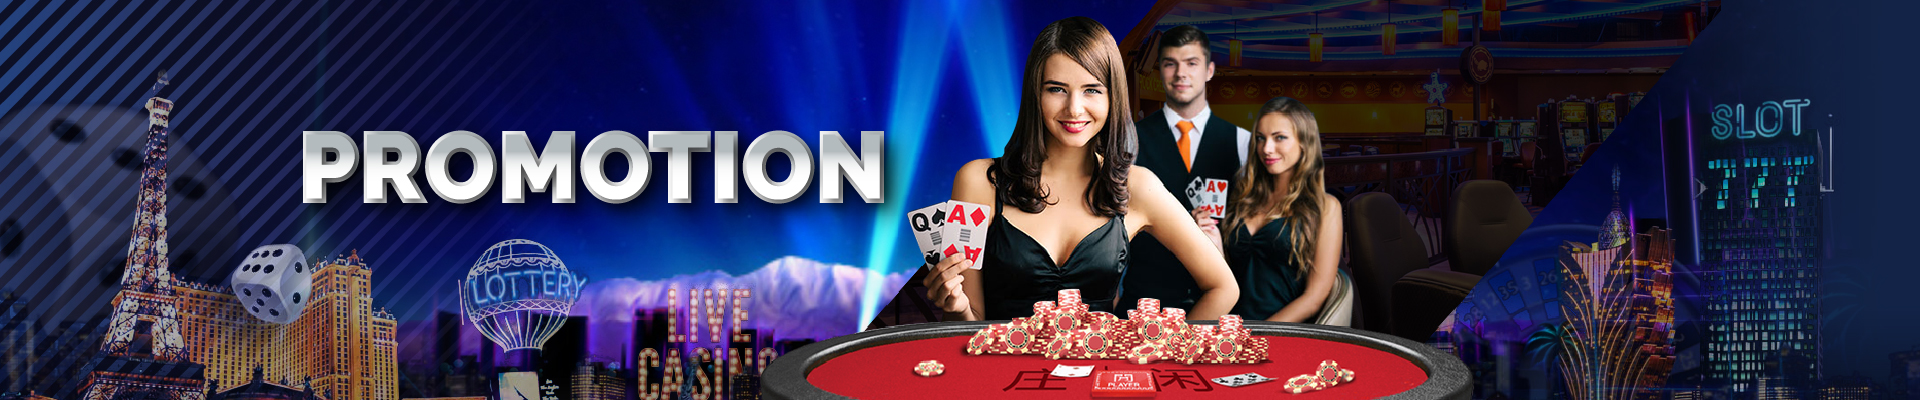 UWIN33 Online Casino Malaysia Promotion Banner